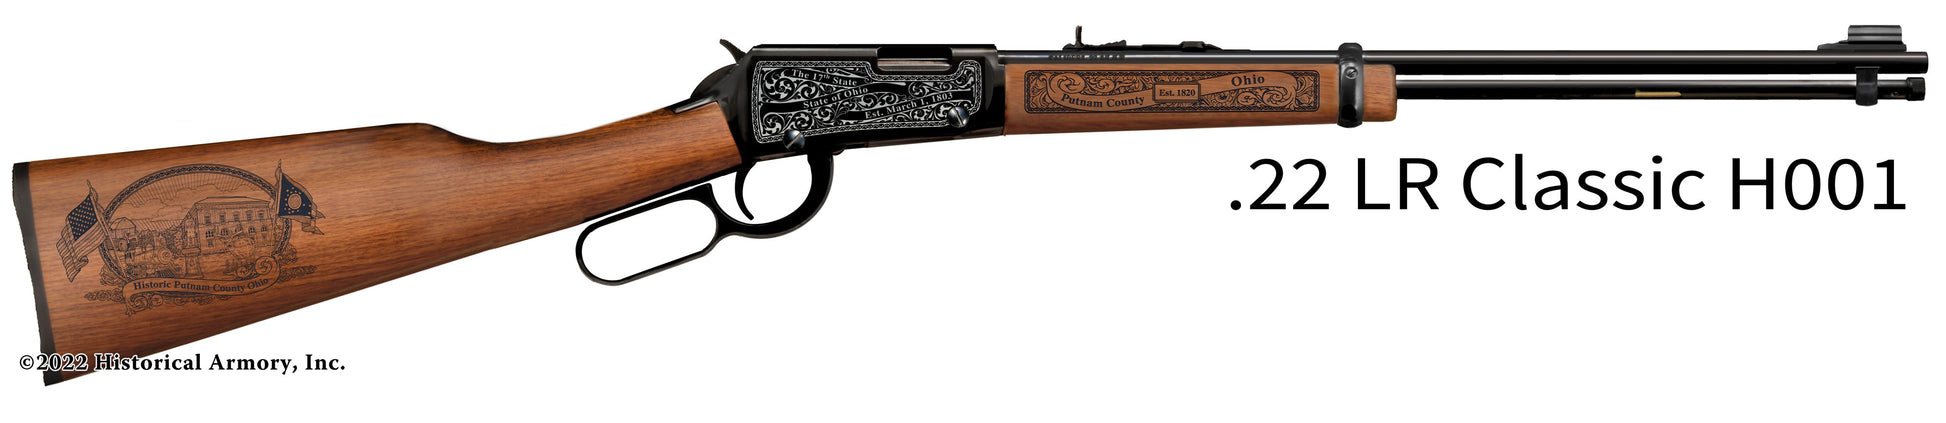 Putnam County Ohio Engraved Henry H001 Rifle